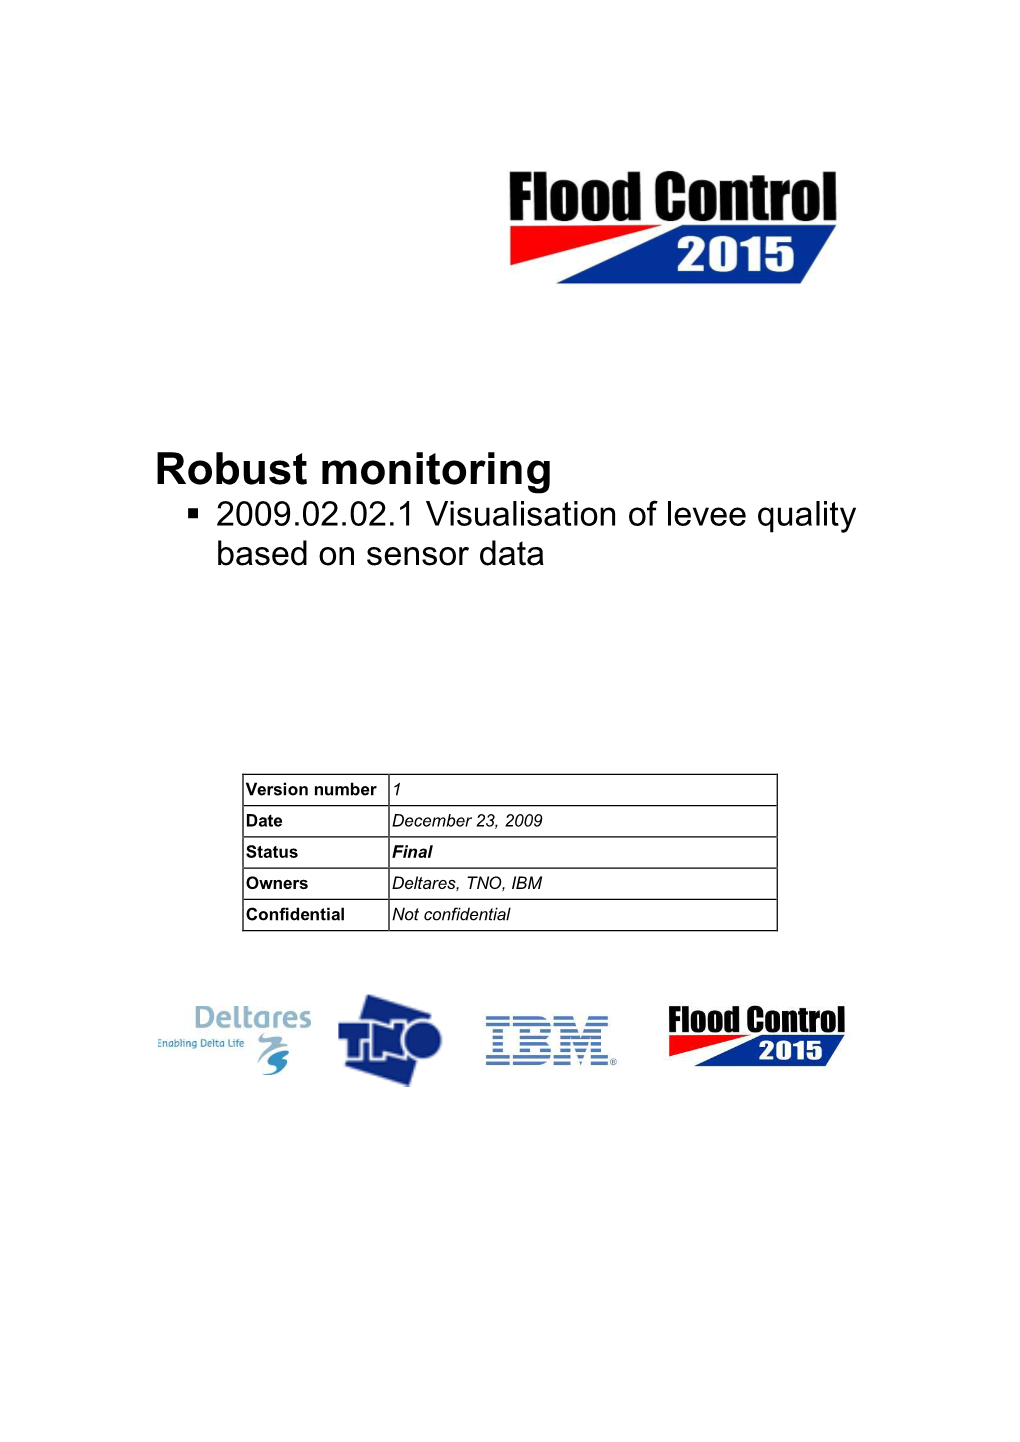 Robust Monitoring ƒ 2009.02.02.1 Visualisation of Levee Quality Based on Sensor Data